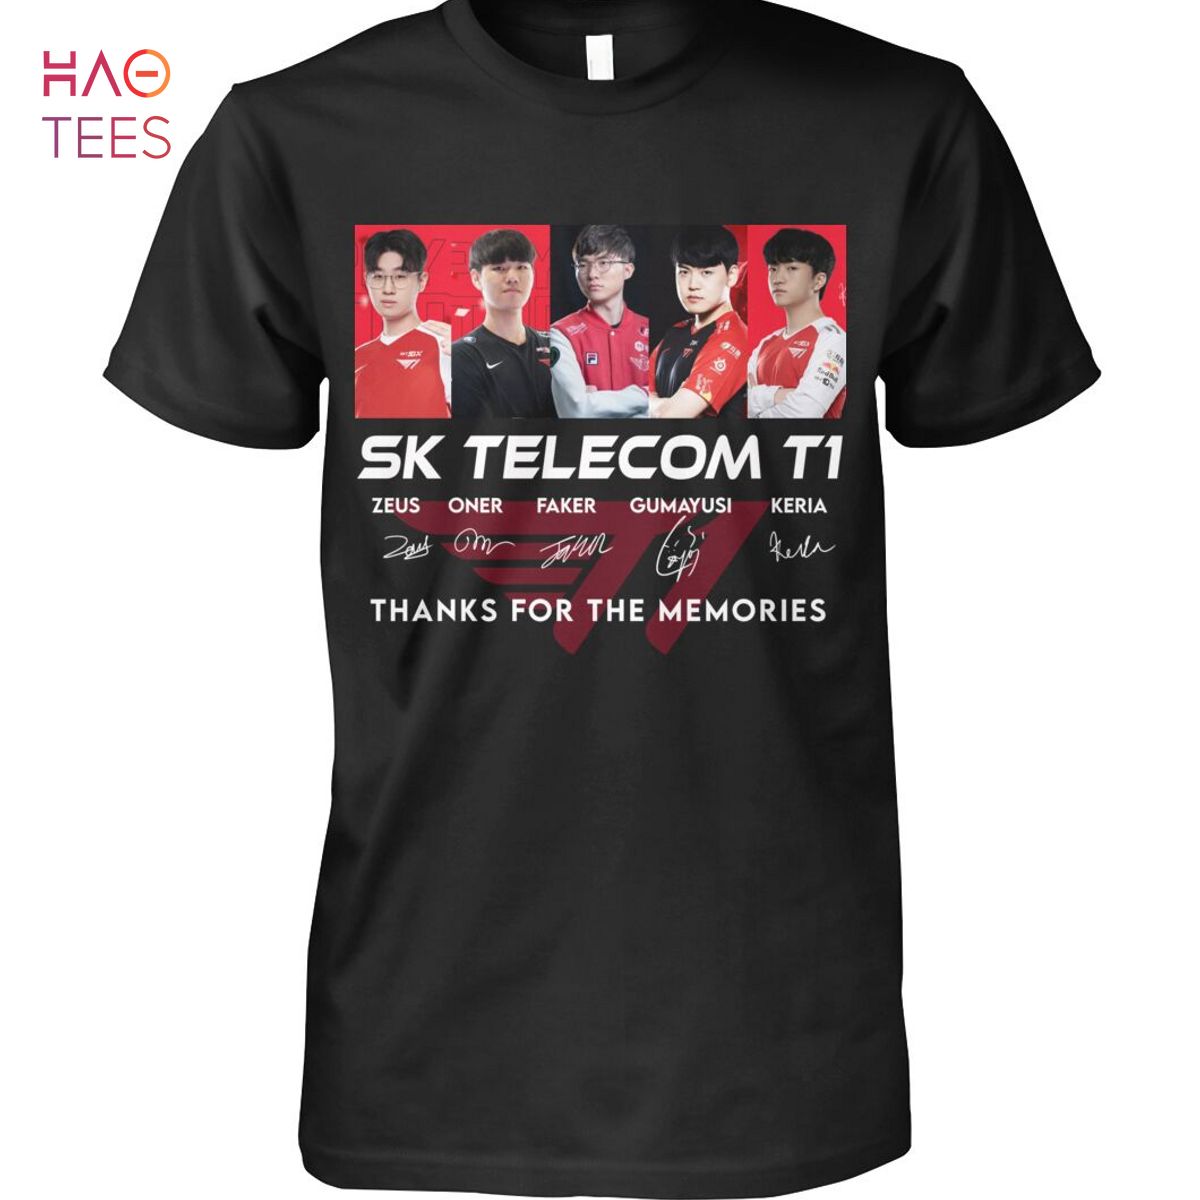 HOT SKTelecom T1 Shirt Limited Edition